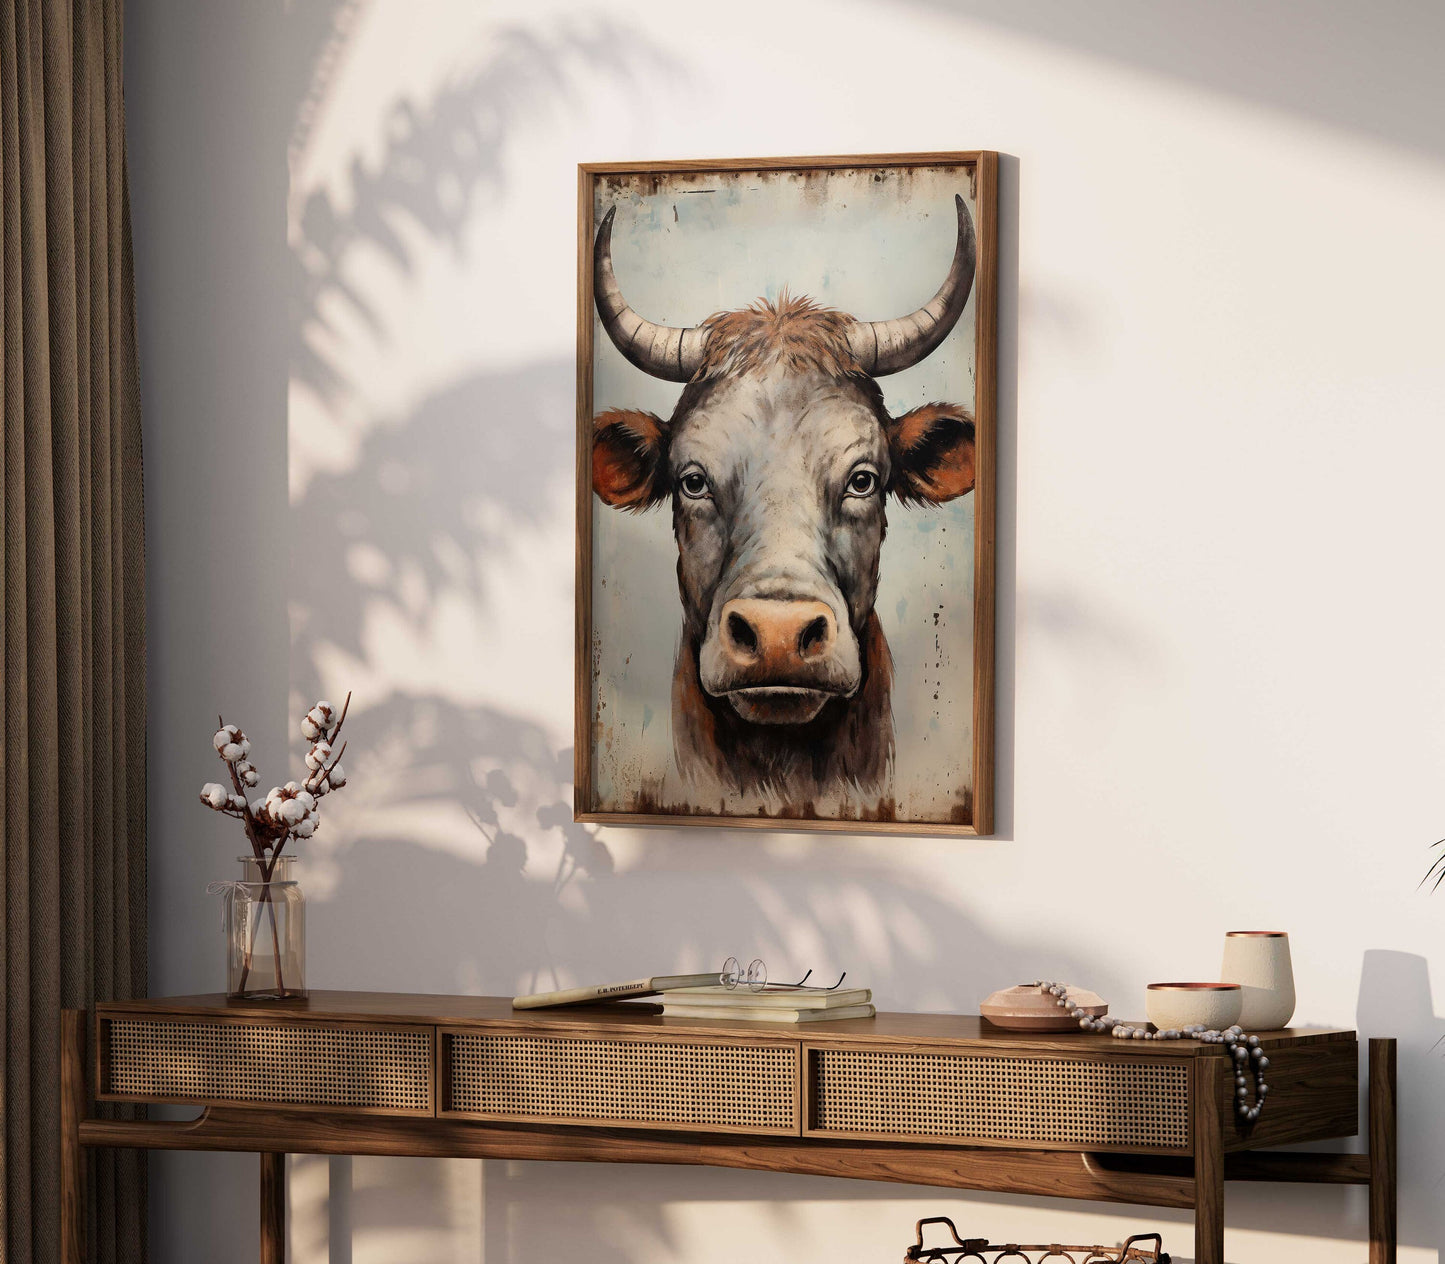 Bull Wall Art, Bull Portrait, Cow Wall Art, Rustic Farmhouse Decor, Country Home Decor, Farm Animal Print, Digital Printable Cattle Art